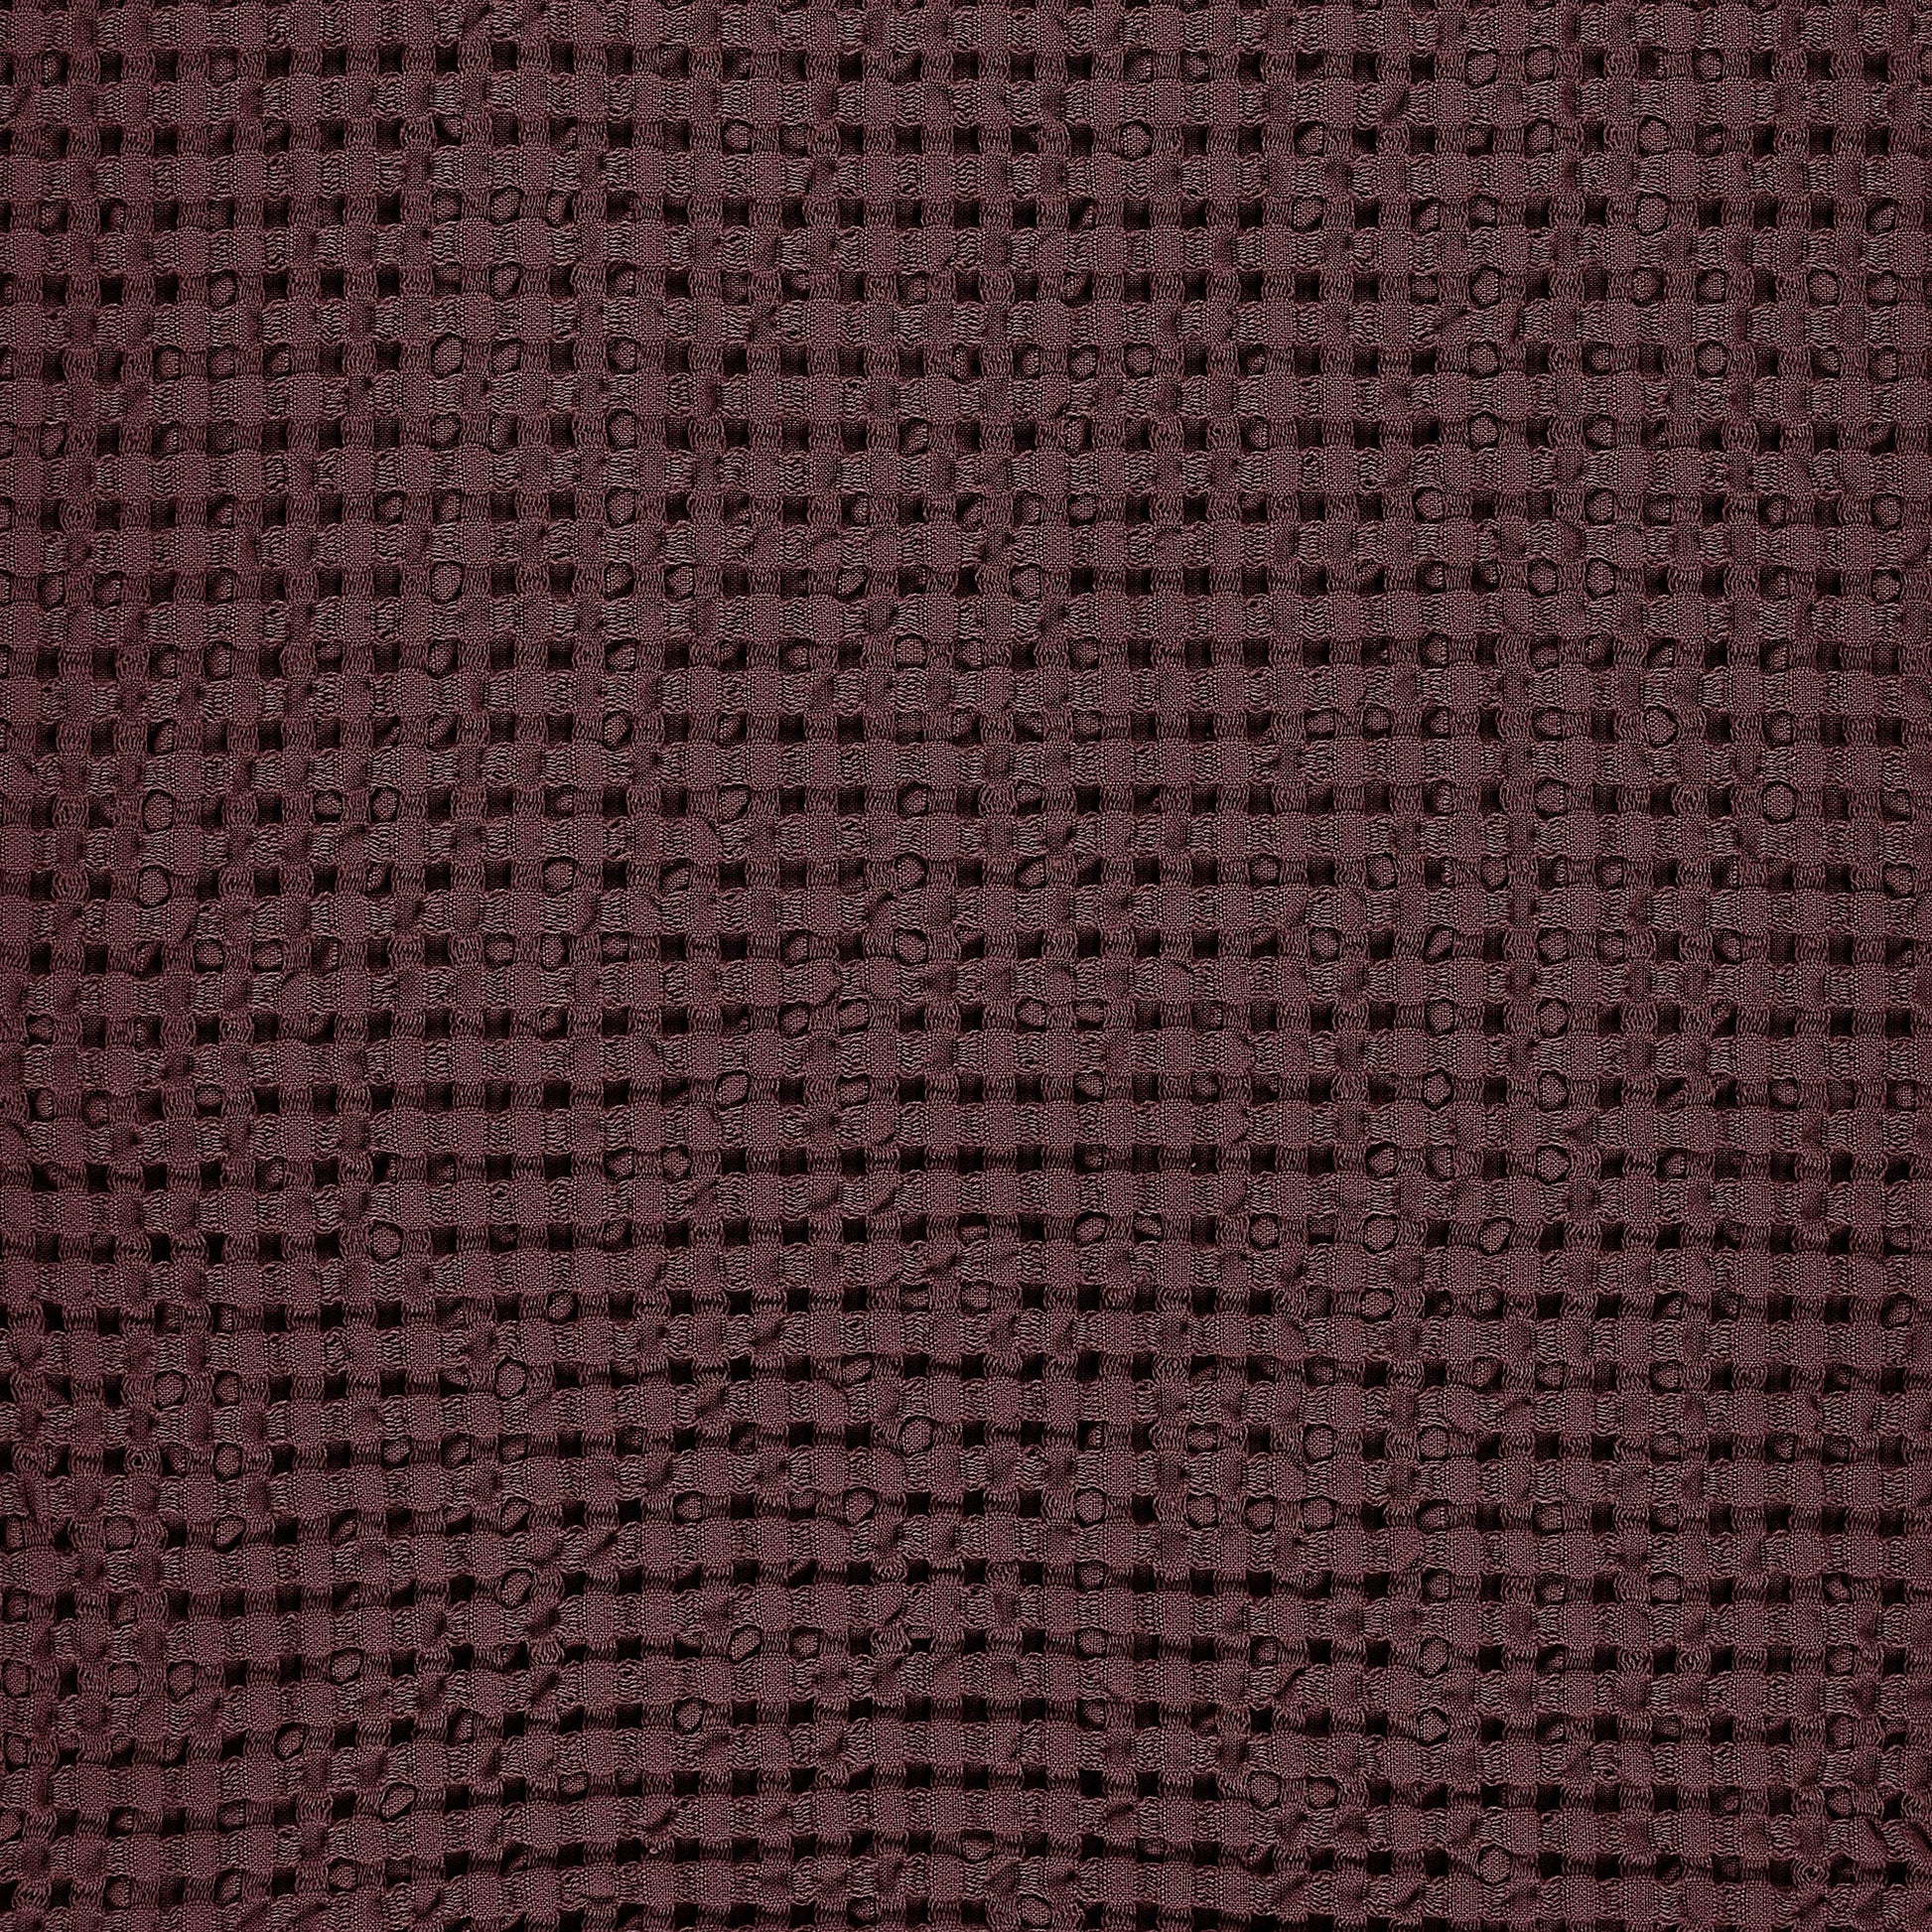 Pousada Egyptian Cotton Towels - 509 Vineyard - |VESIMI Design| Luxury and Rustic bathrooms online